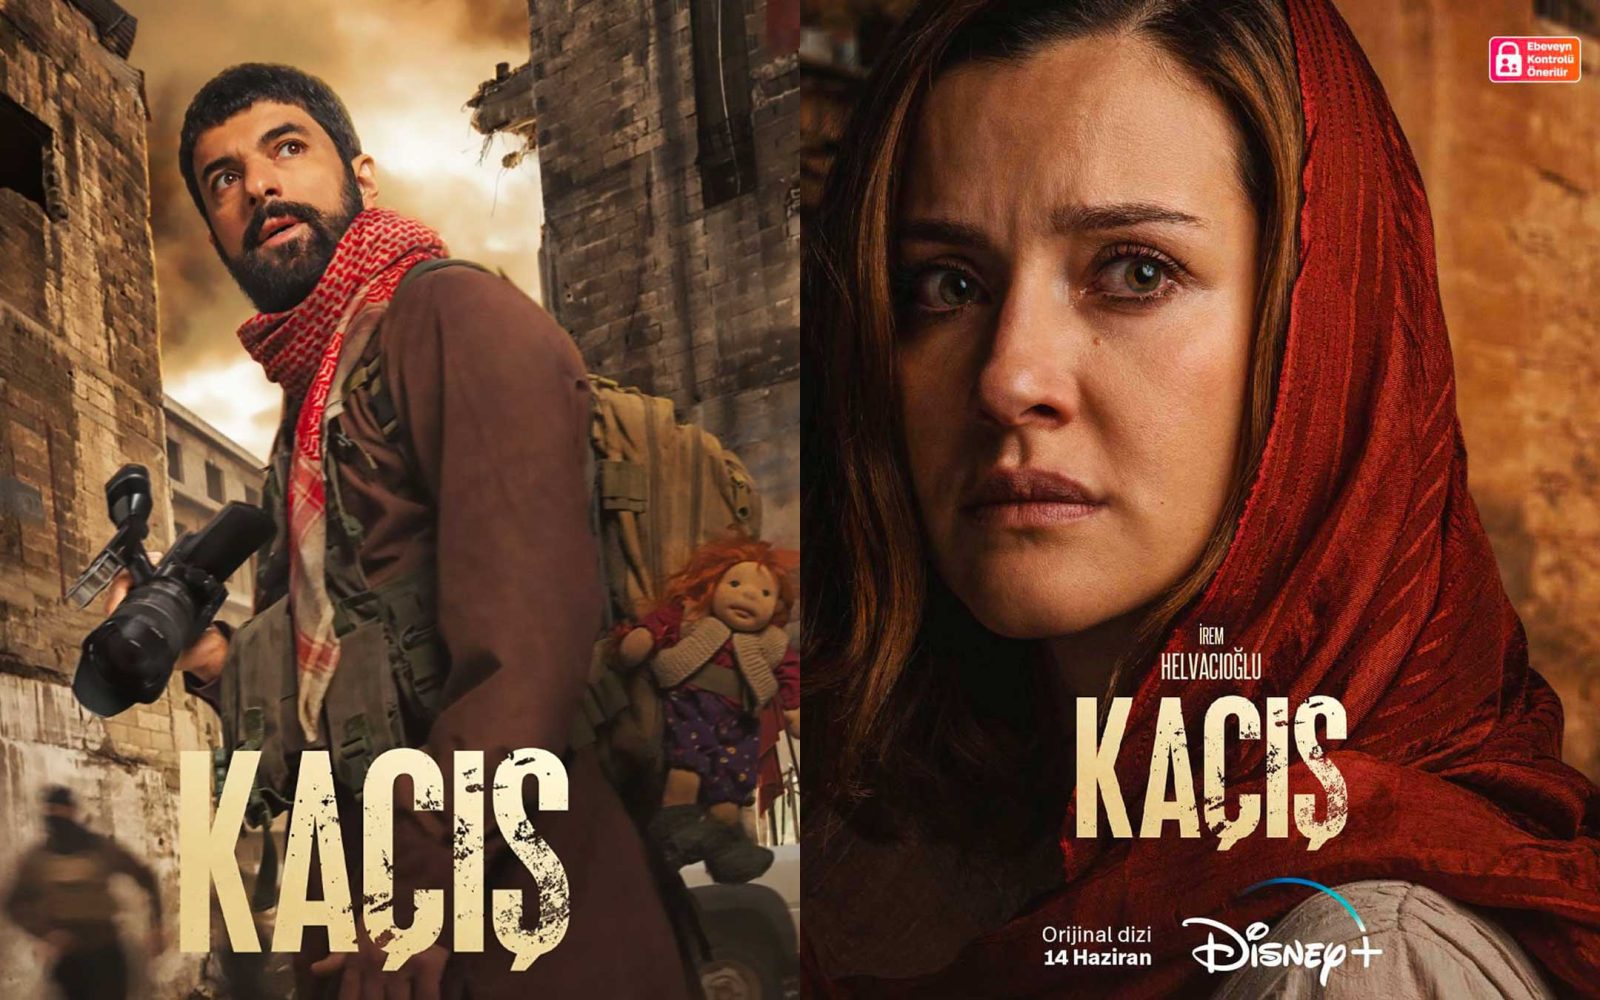 Engin Akyürek’s new series Kaçış starts on June 14 at Disney Plus